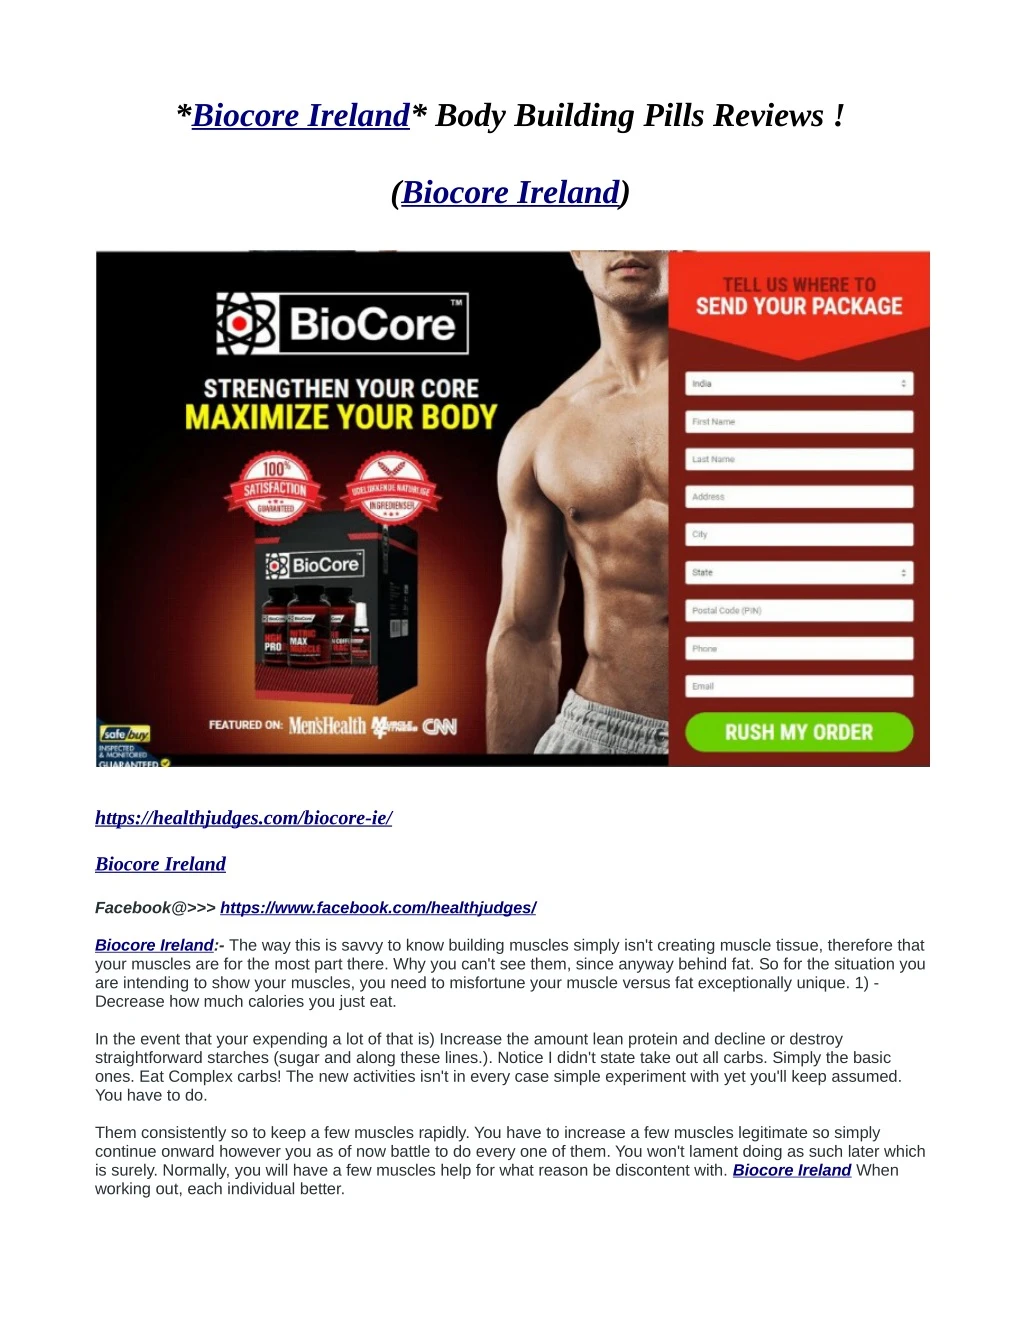 biocore ireland body building pills reviews